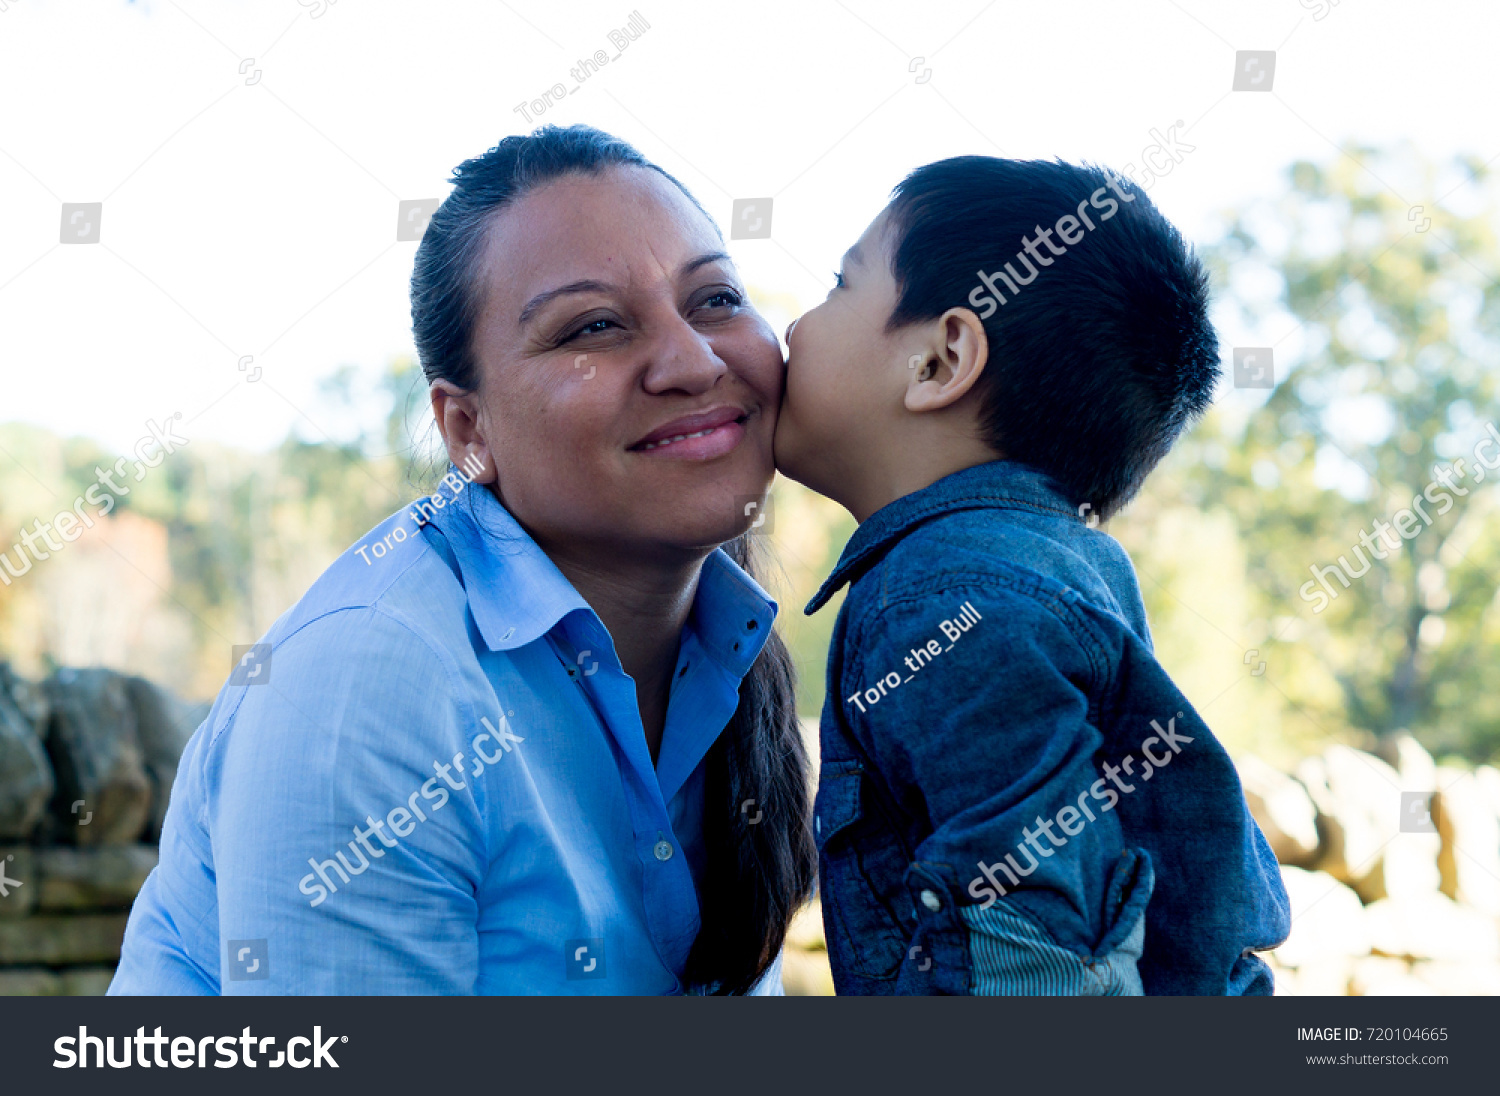 barbara fenley add latina mom and son photo